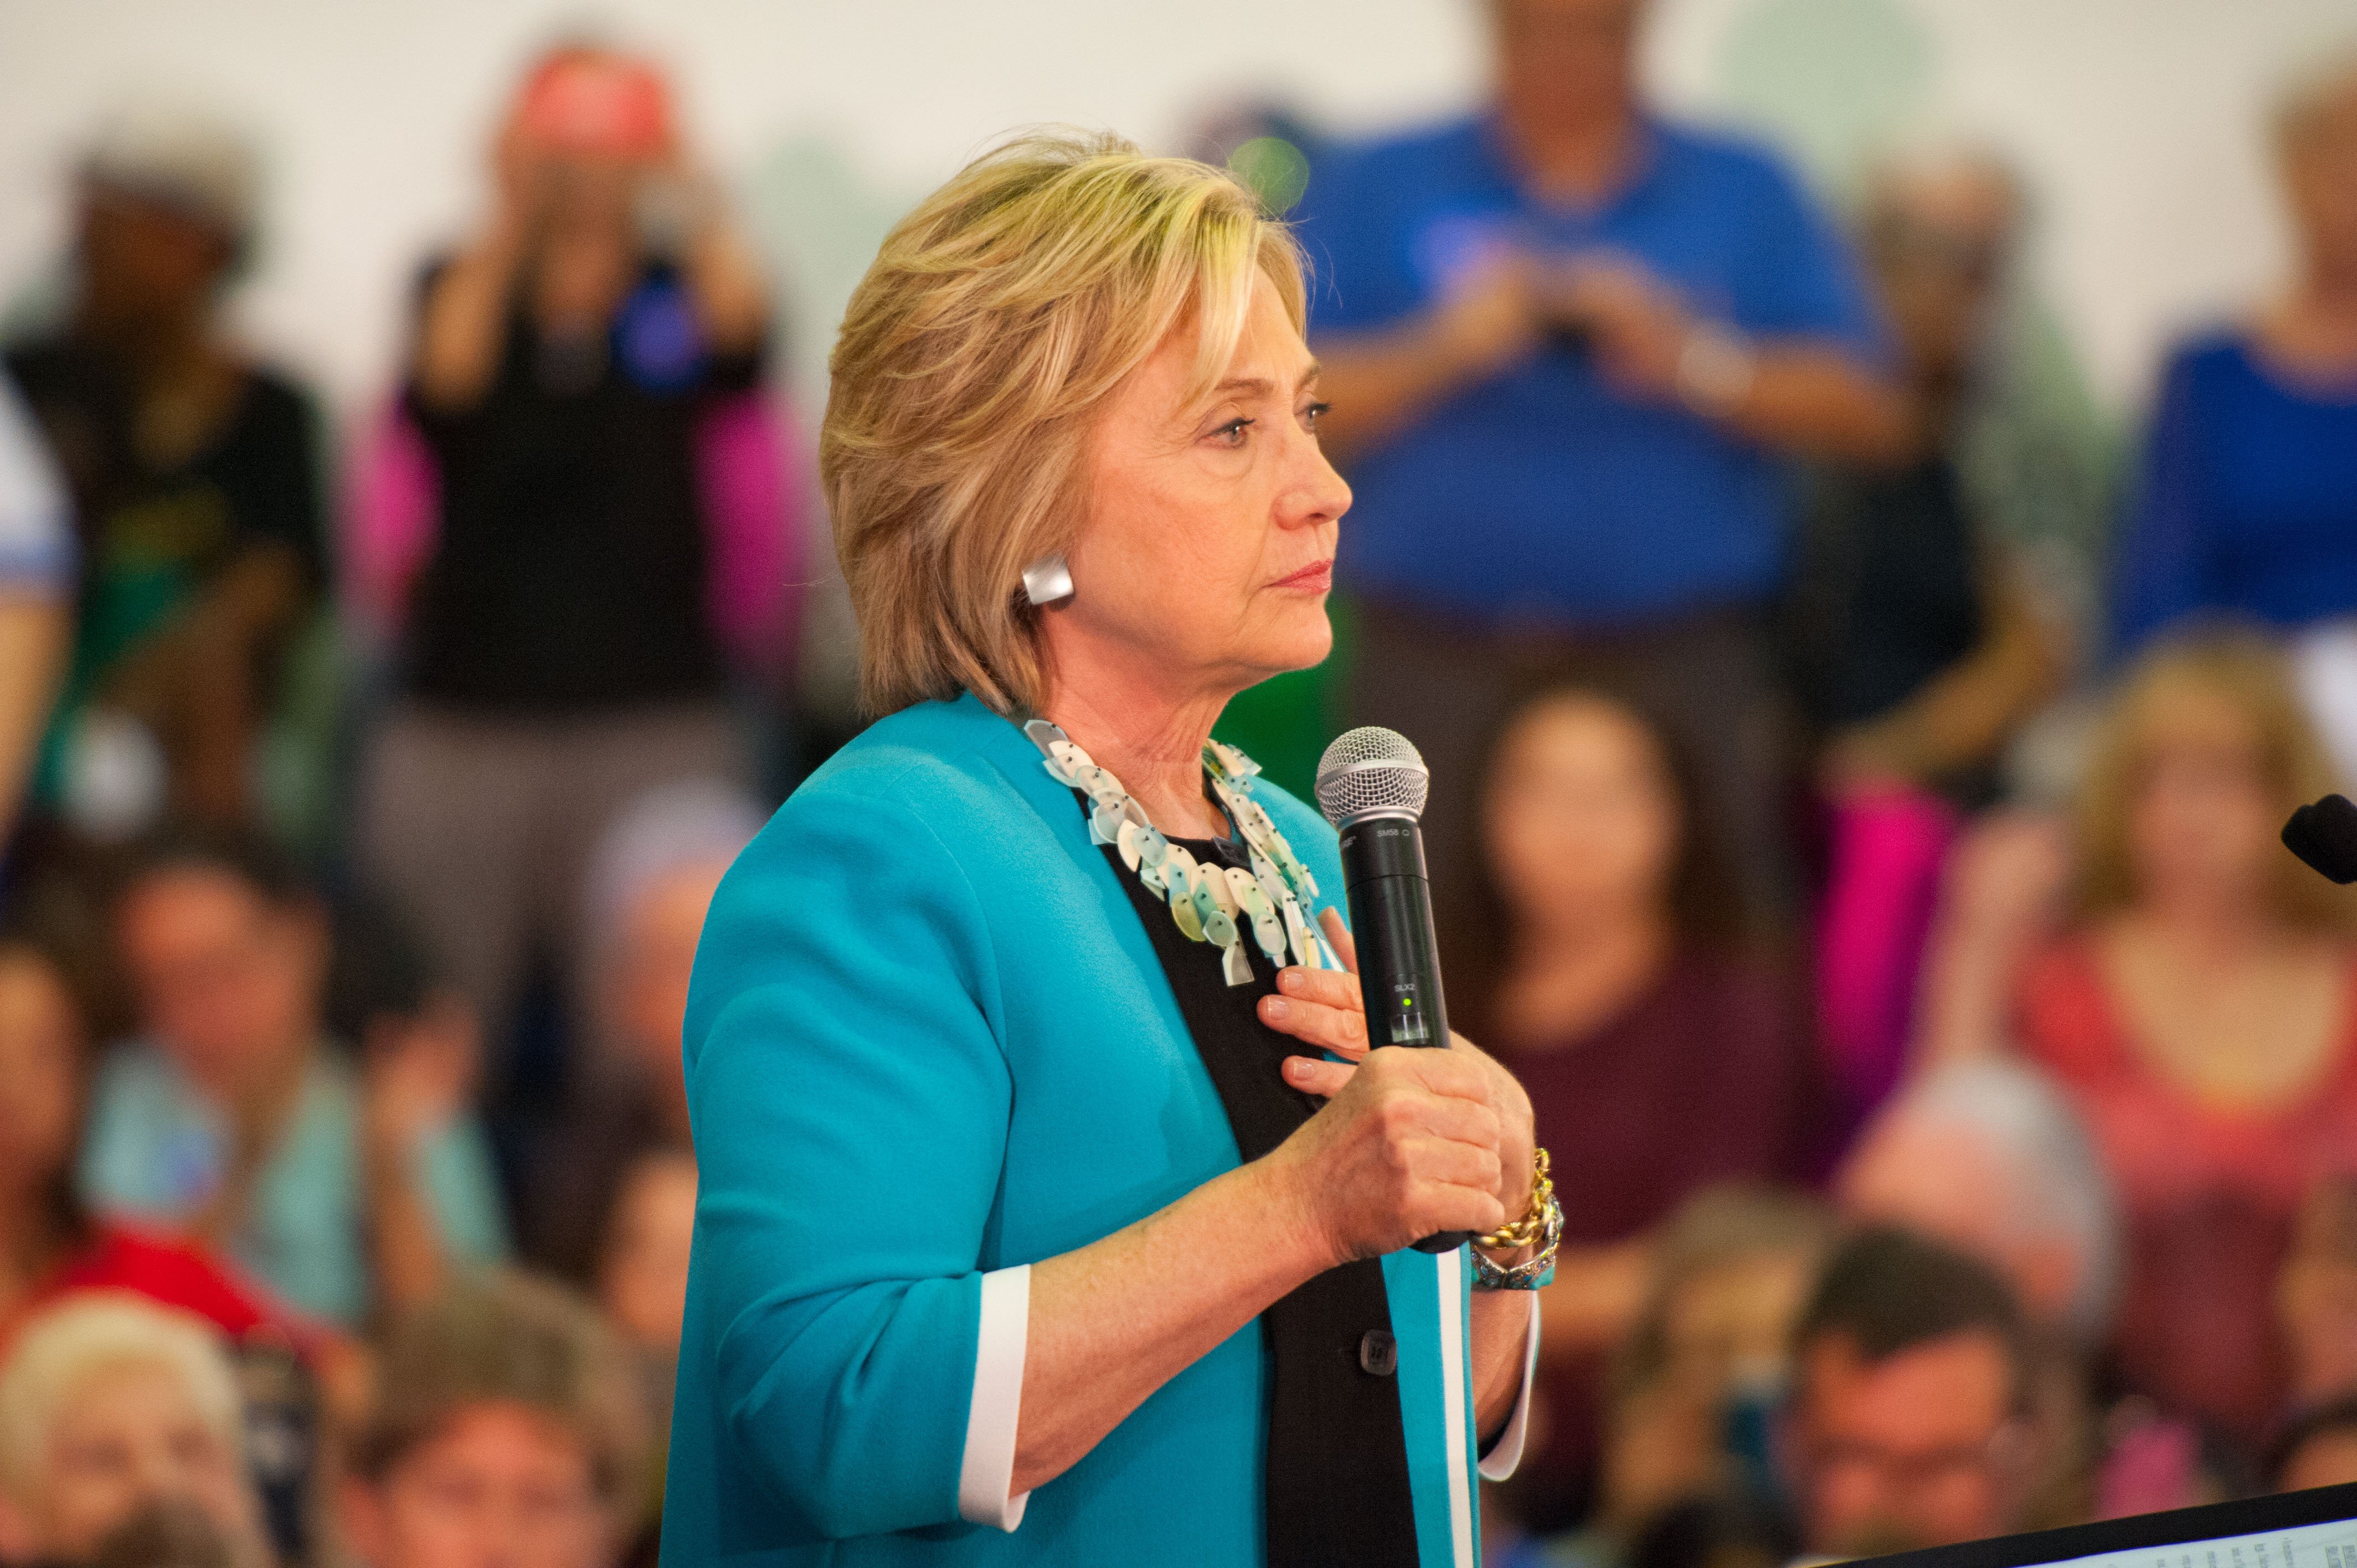 Hillary Clinton speaks at Broward College for Organzing Grassroots event in Davie, Florida on Oct. 2, 2015. (Michele Eve Sandberg—Corbis)